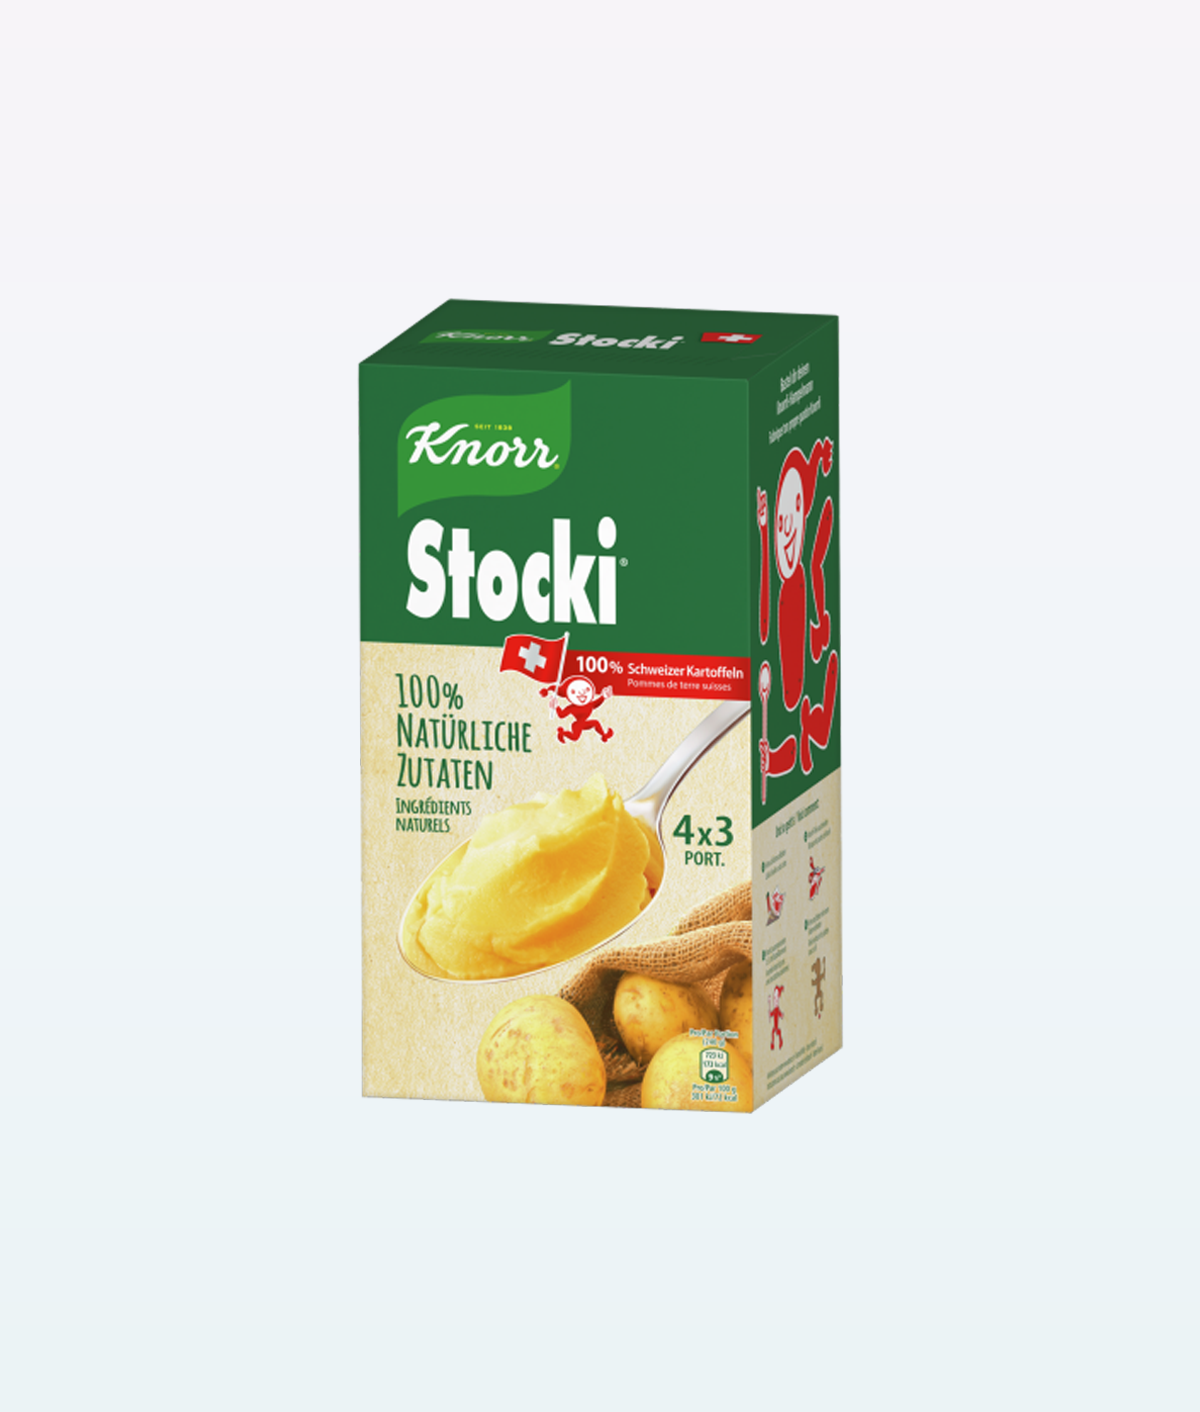 Knorr Stocki pommes de terre 4 × 3 portions 440g